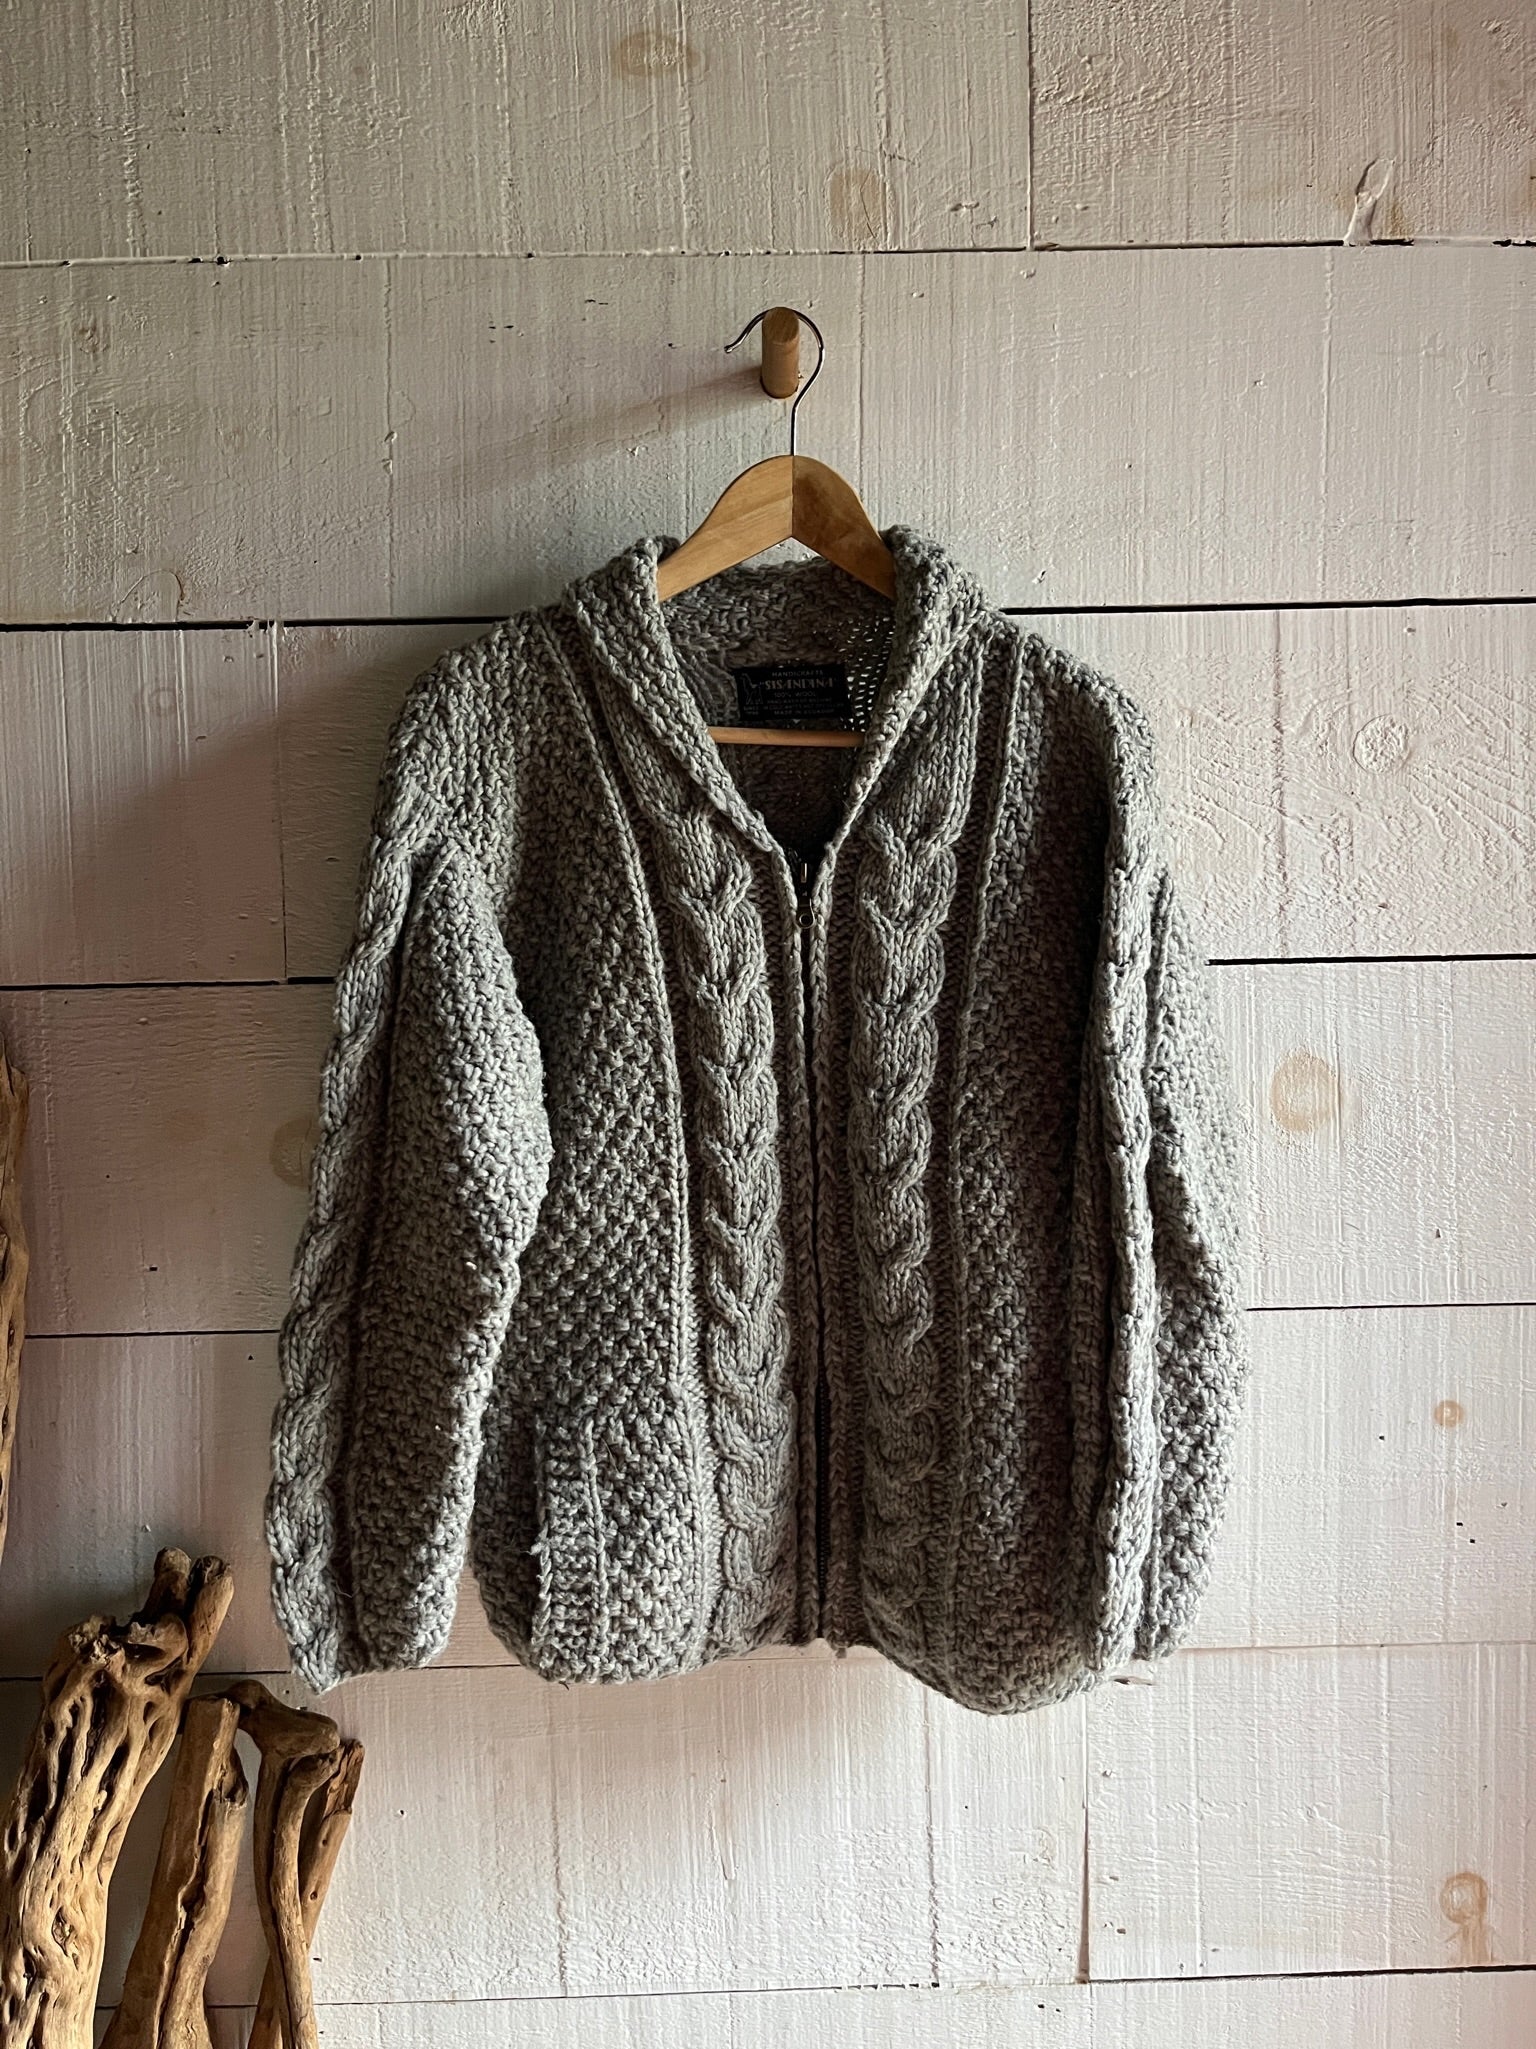 Vintage Wool Fishermen's Sweater